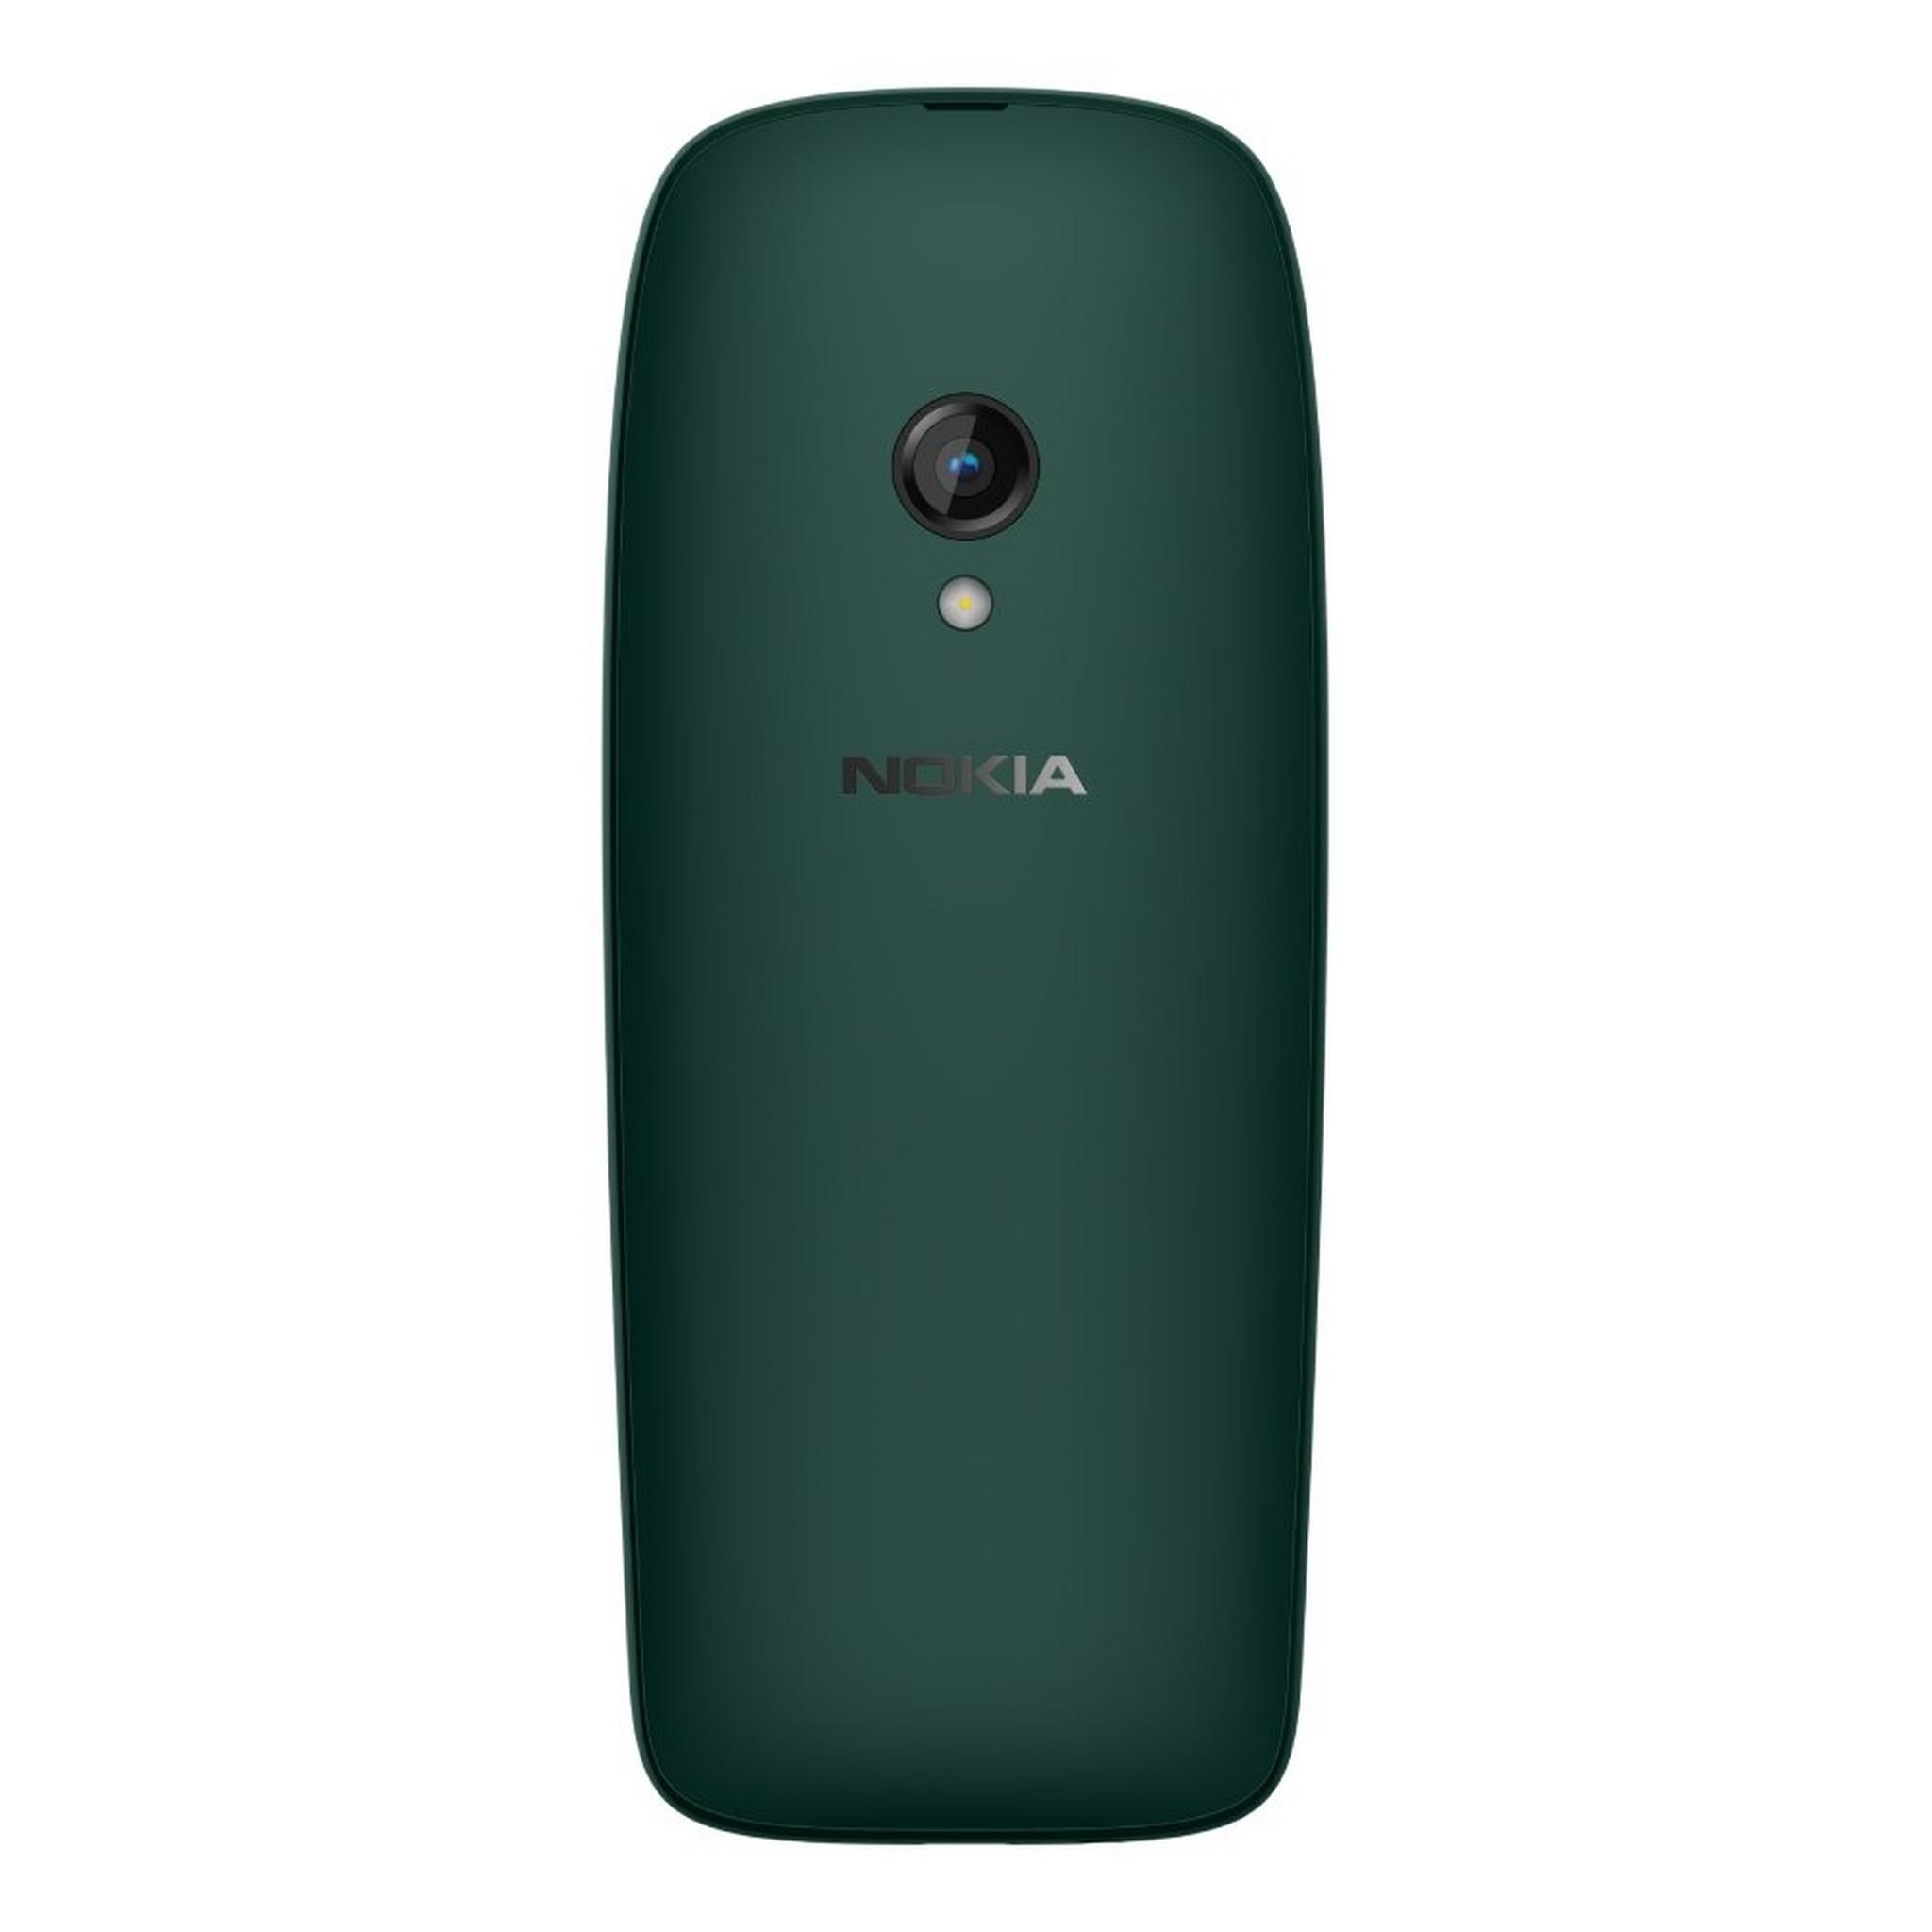 Nokia 6310 TA-1400 16MB Phone - Green